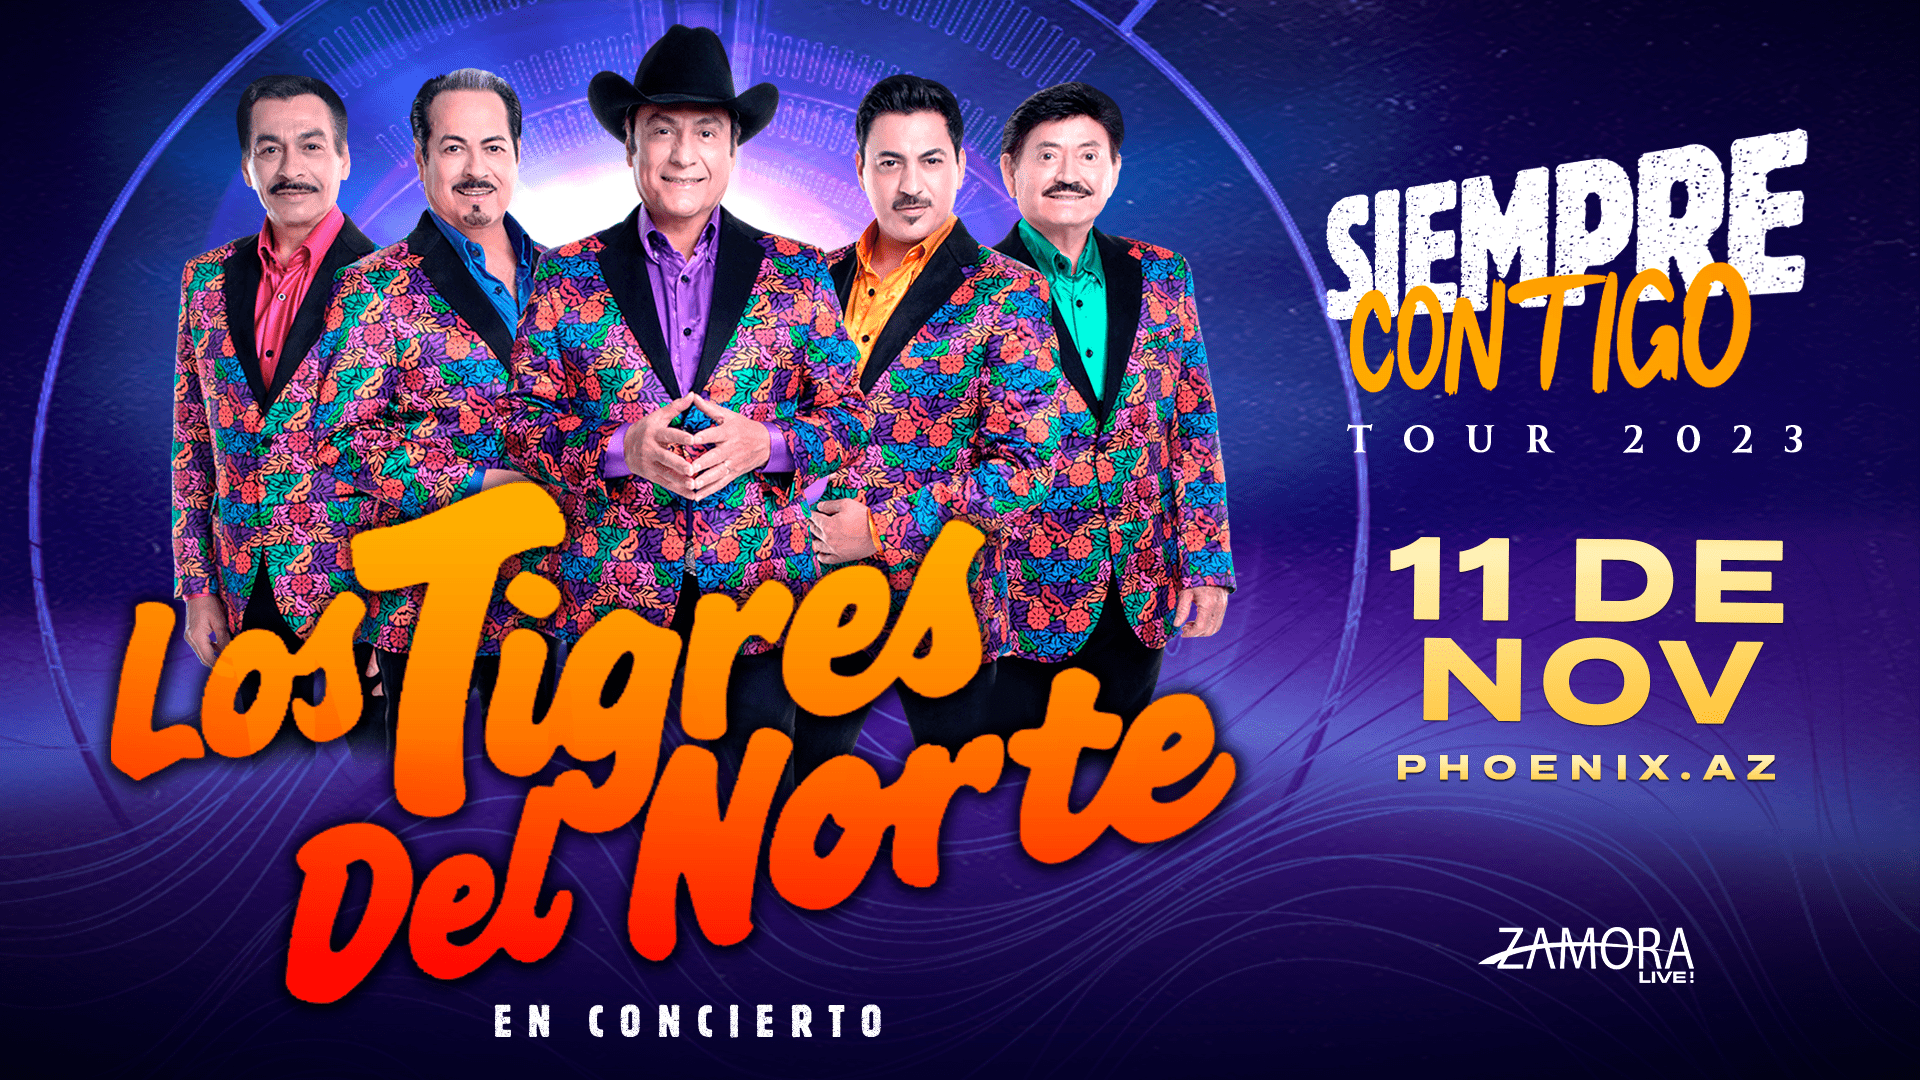 Los Tigres del Norte - Siempre Contigo Tour 2023 | November 11, 2023 at 8 PM at Footprint Center